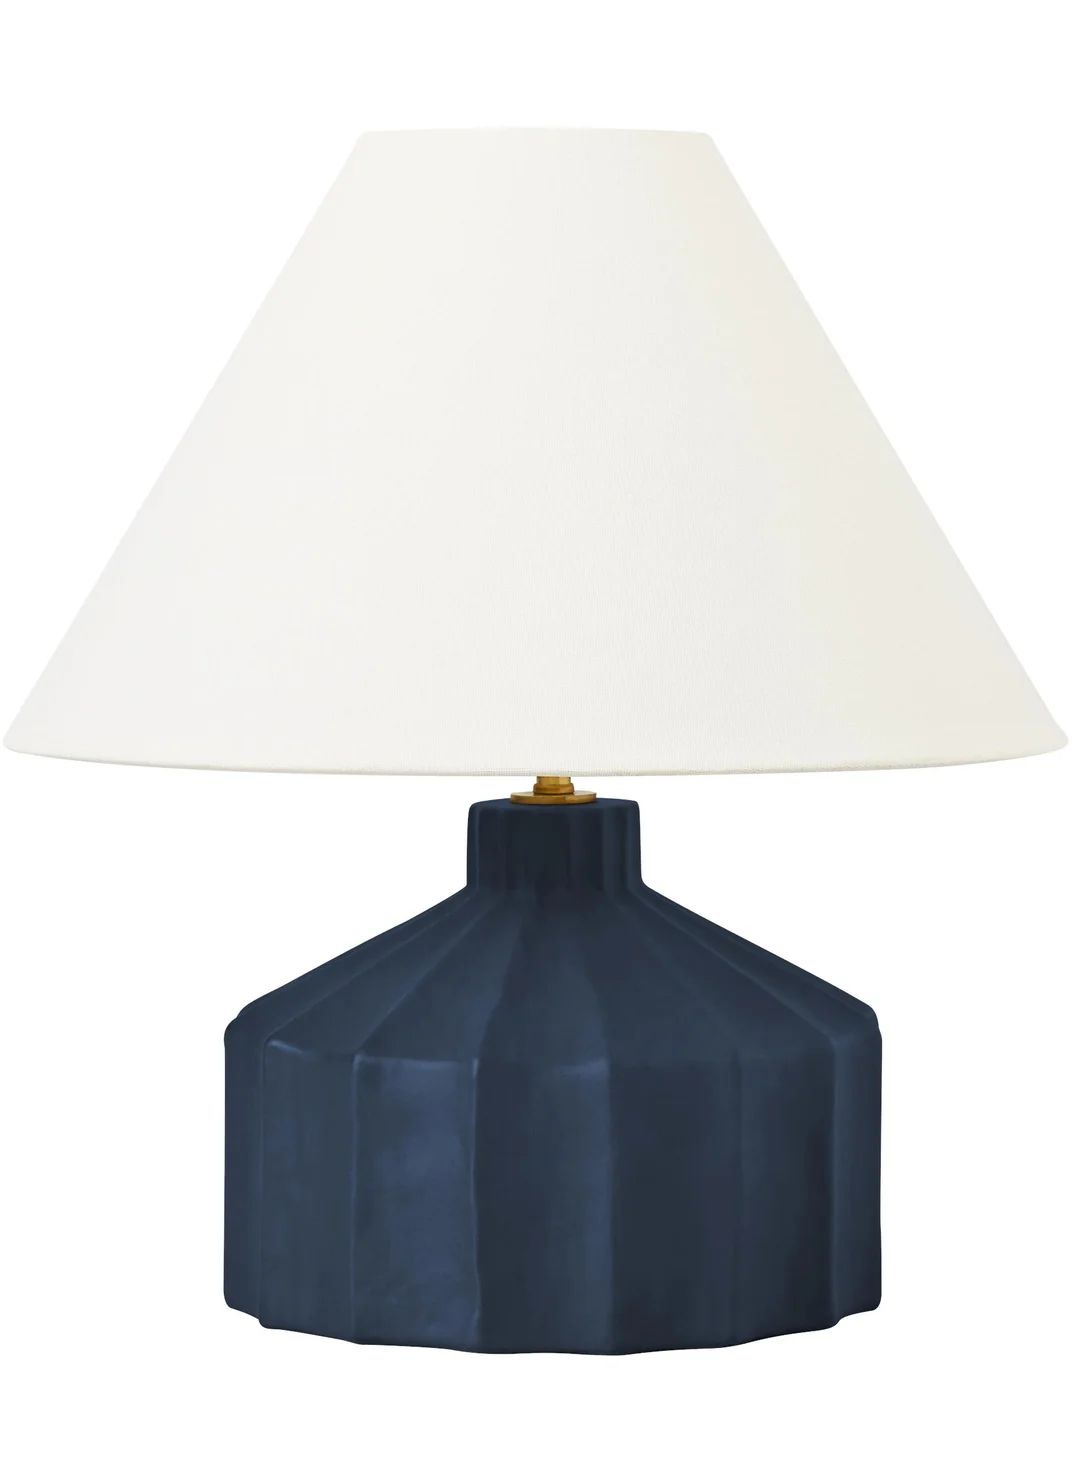 Veneto Small Table Lamp | Burke Decor